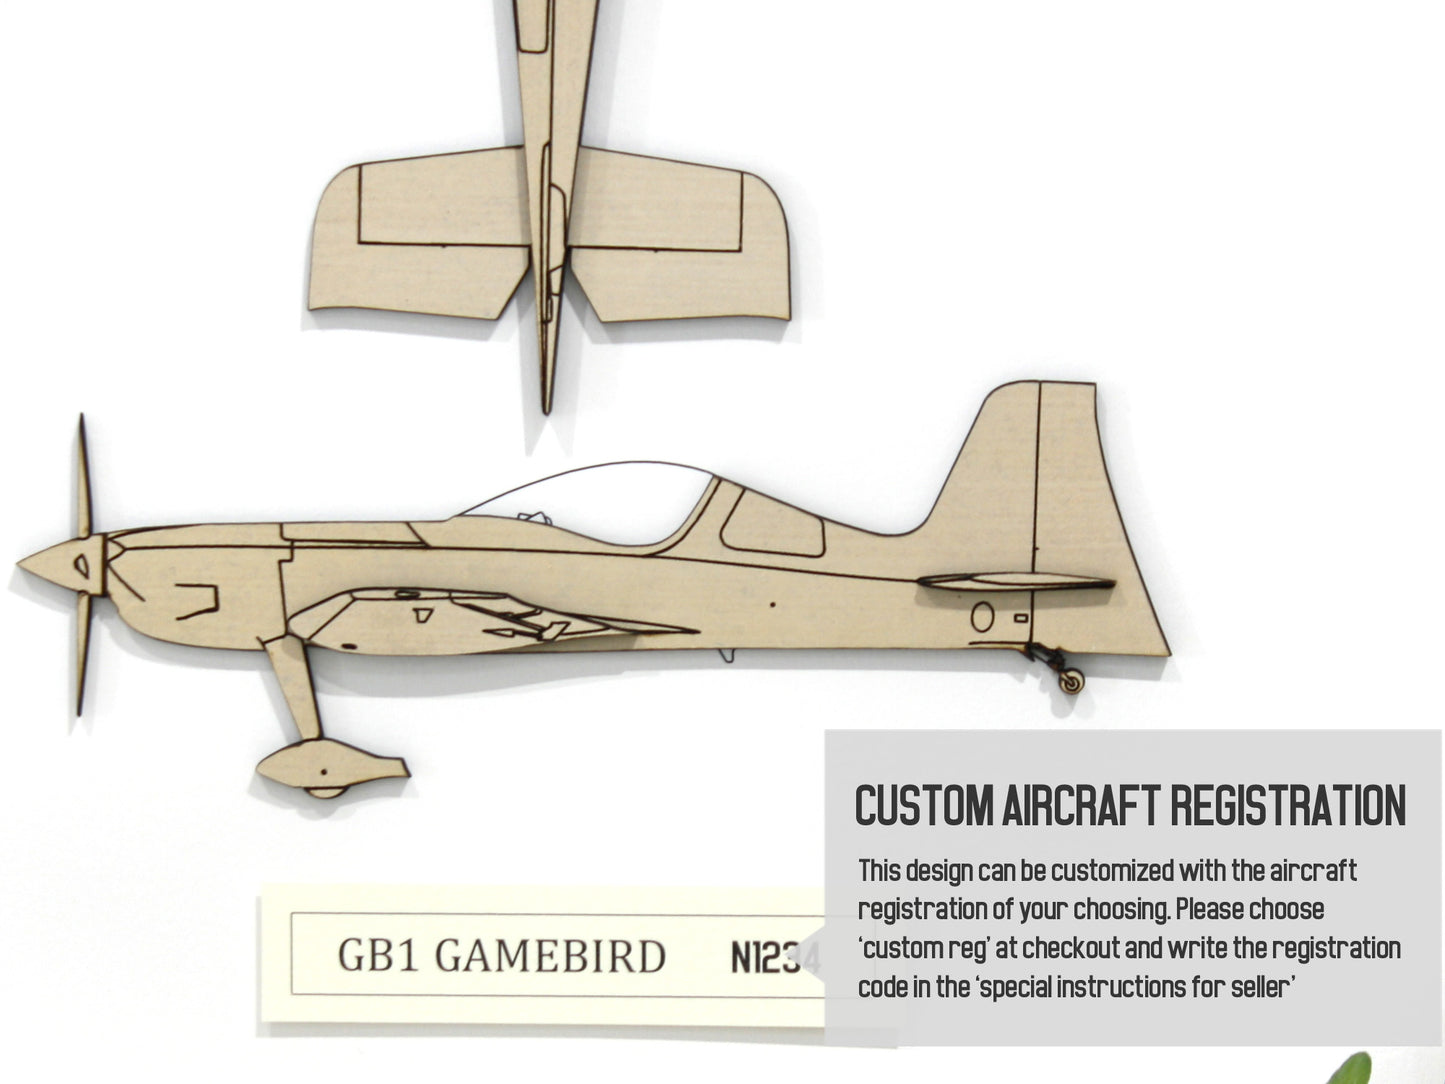 GB1 Gamebird custom aircraft art